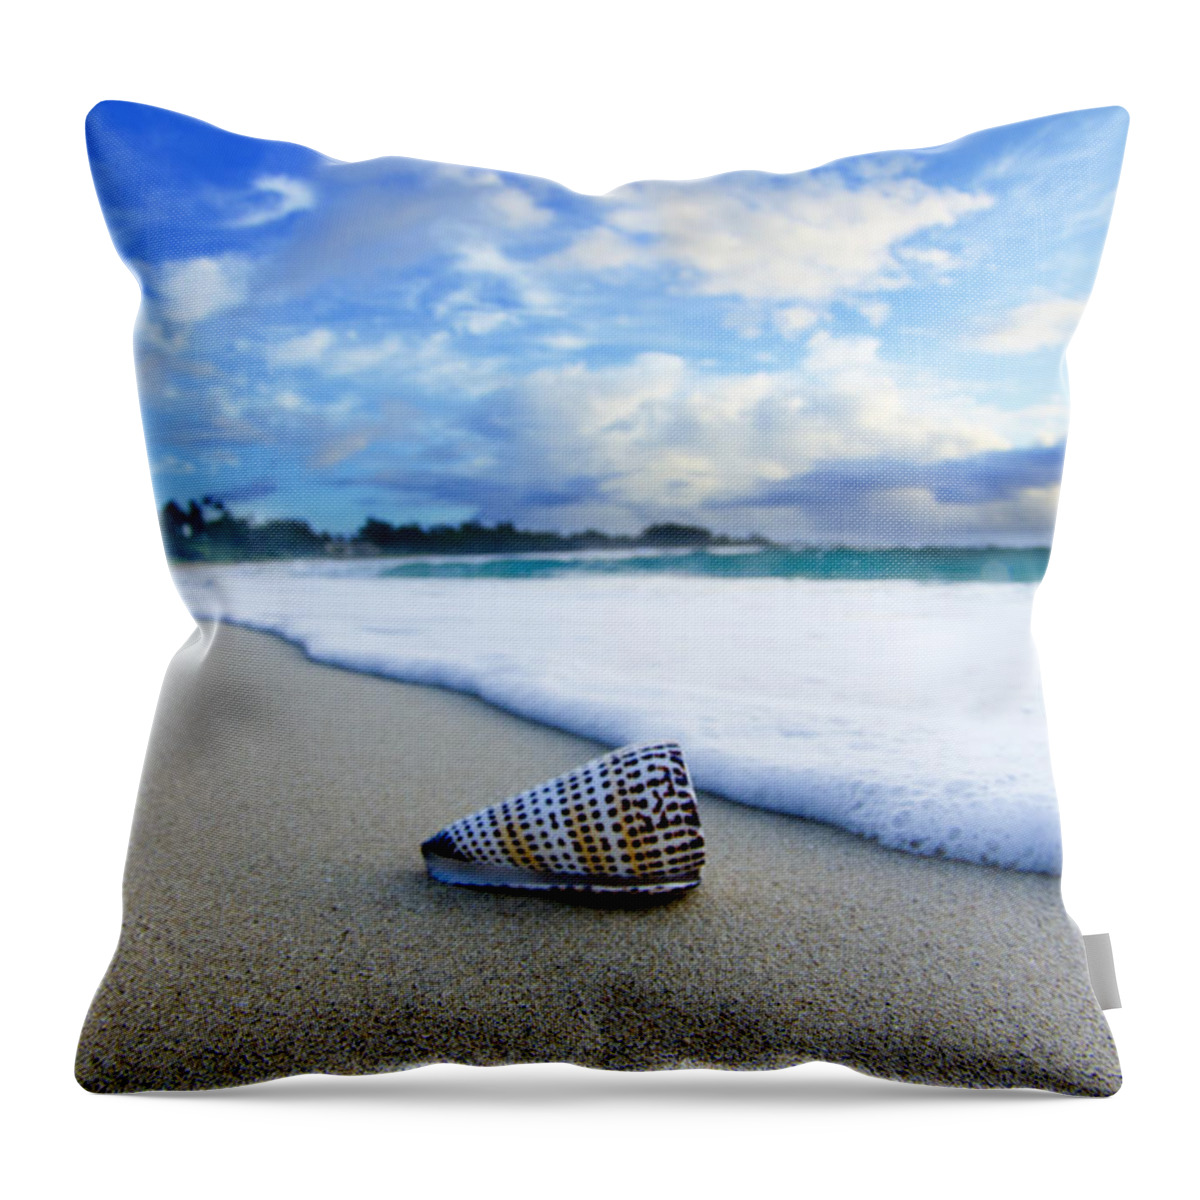  Seashell Throw Pillow featuring the photograph Cone Foam by Sean Davey